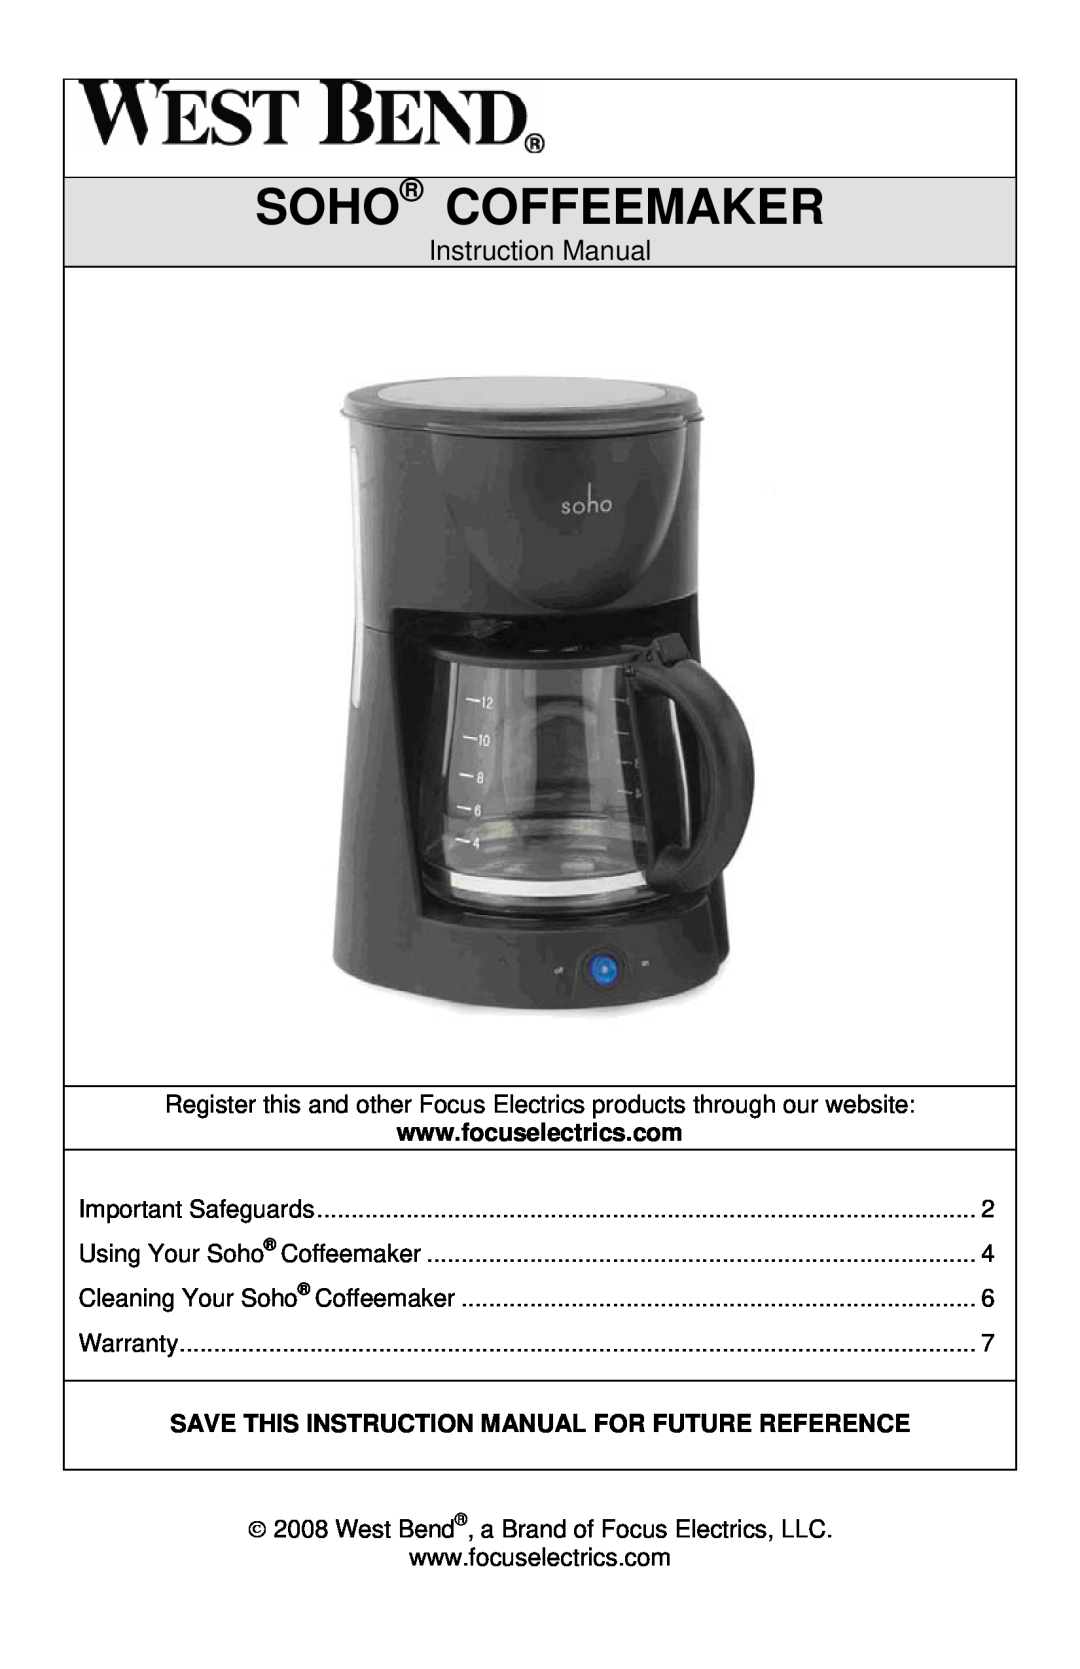 West Bend L5732, SHCM100 instruction manual Soho Coffeemaker, West Bend, a Brand of Focus Electrics, LLC 